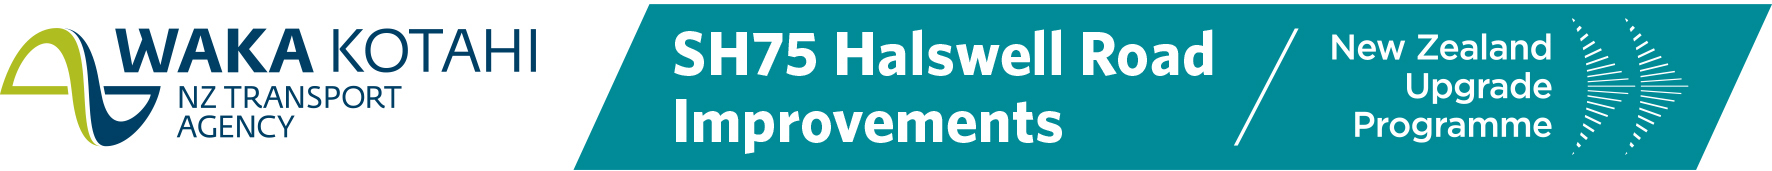 SH75 Halswell Road improvements NZ Upgrade Programme logo